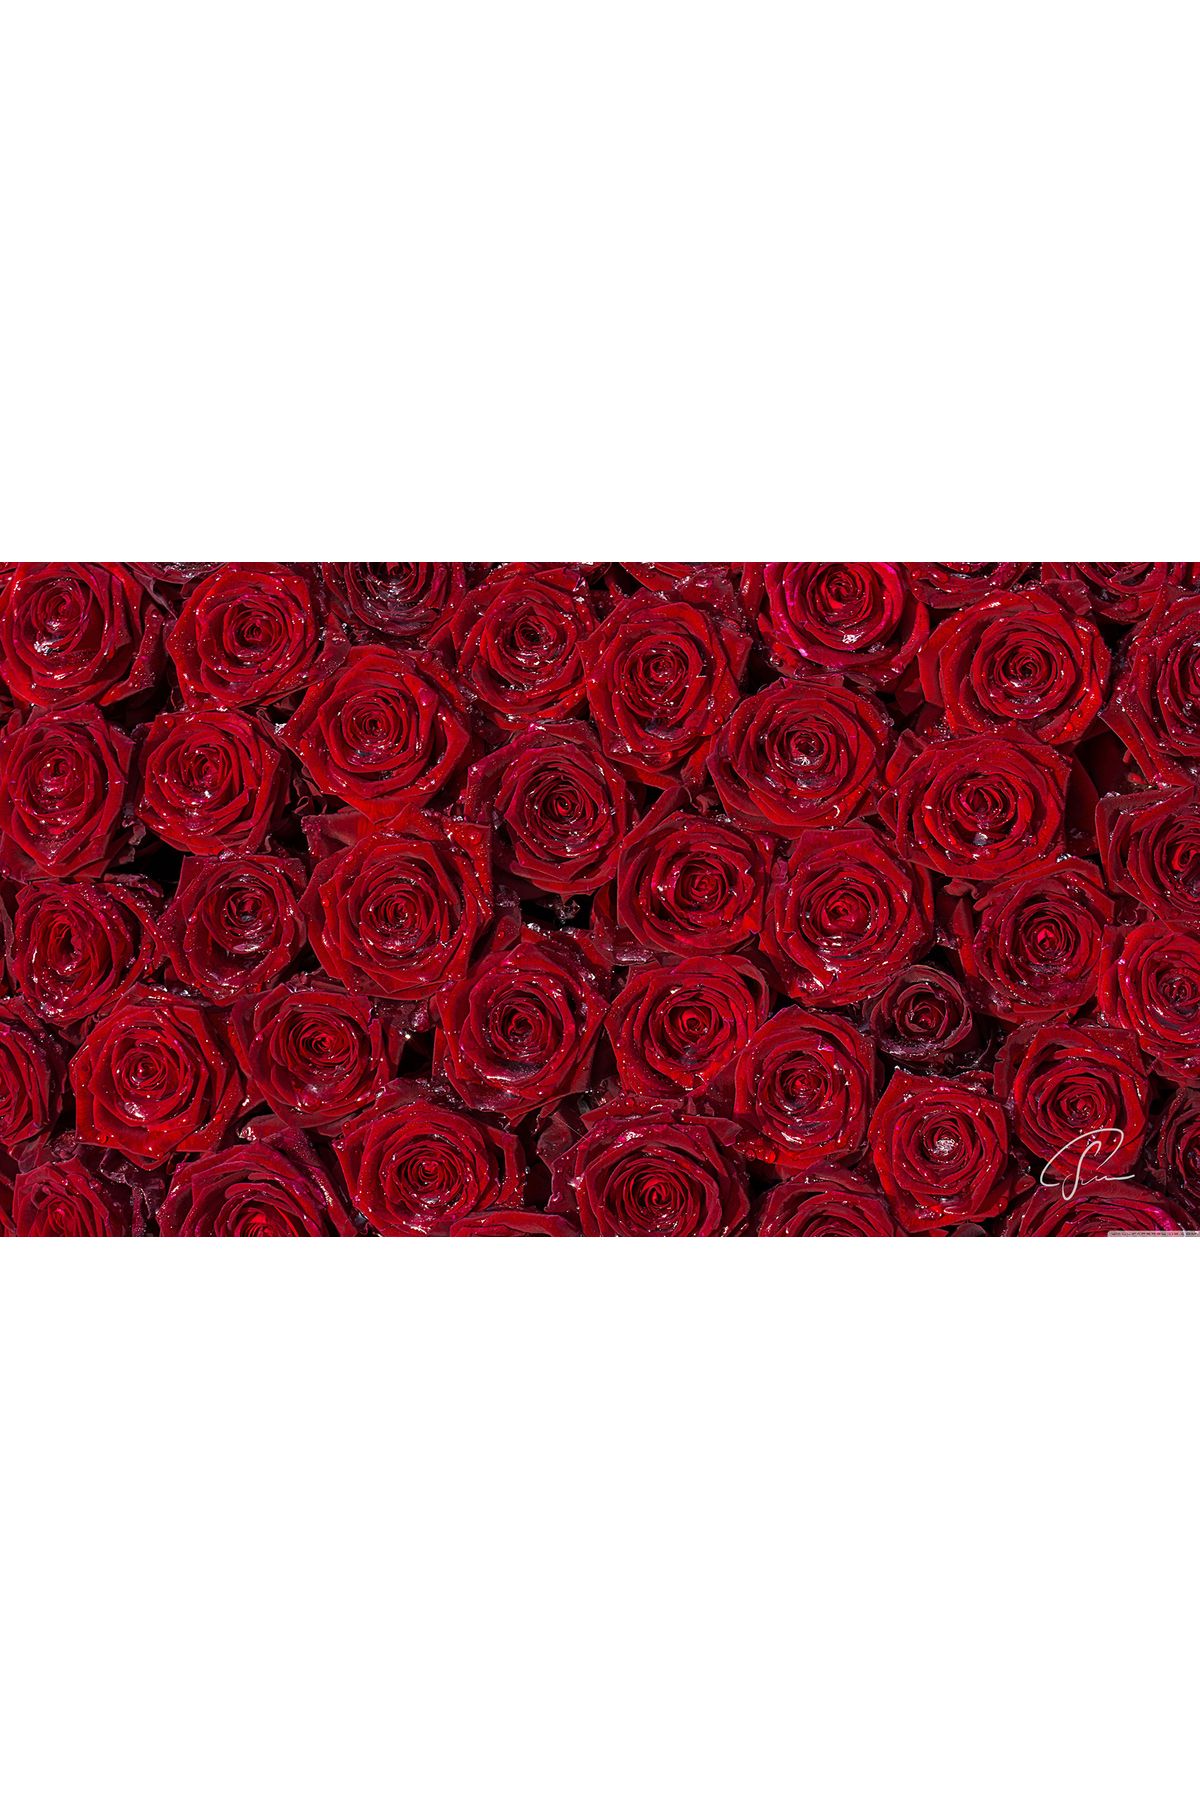 HD Sanatsal Rena-simli Kırmızı Güller Kanvas Tablo (flo-029)